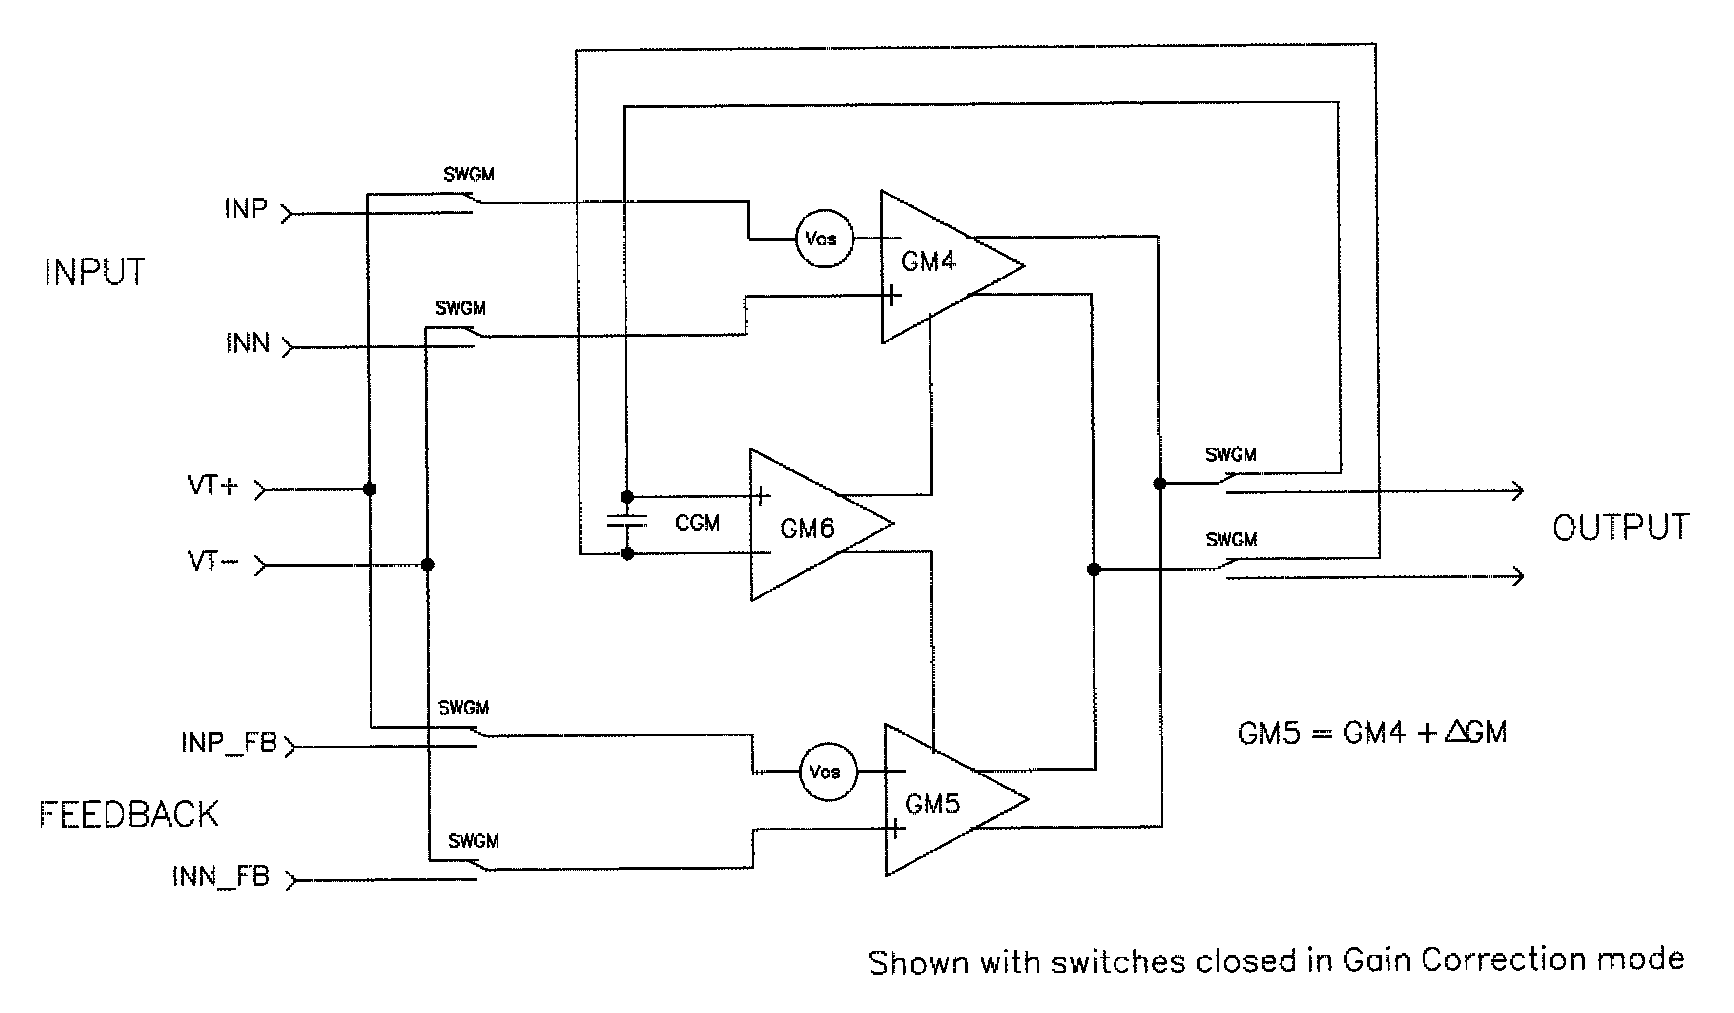 Auto-gain correction and common mode voltage cancellation in a precision amplifier